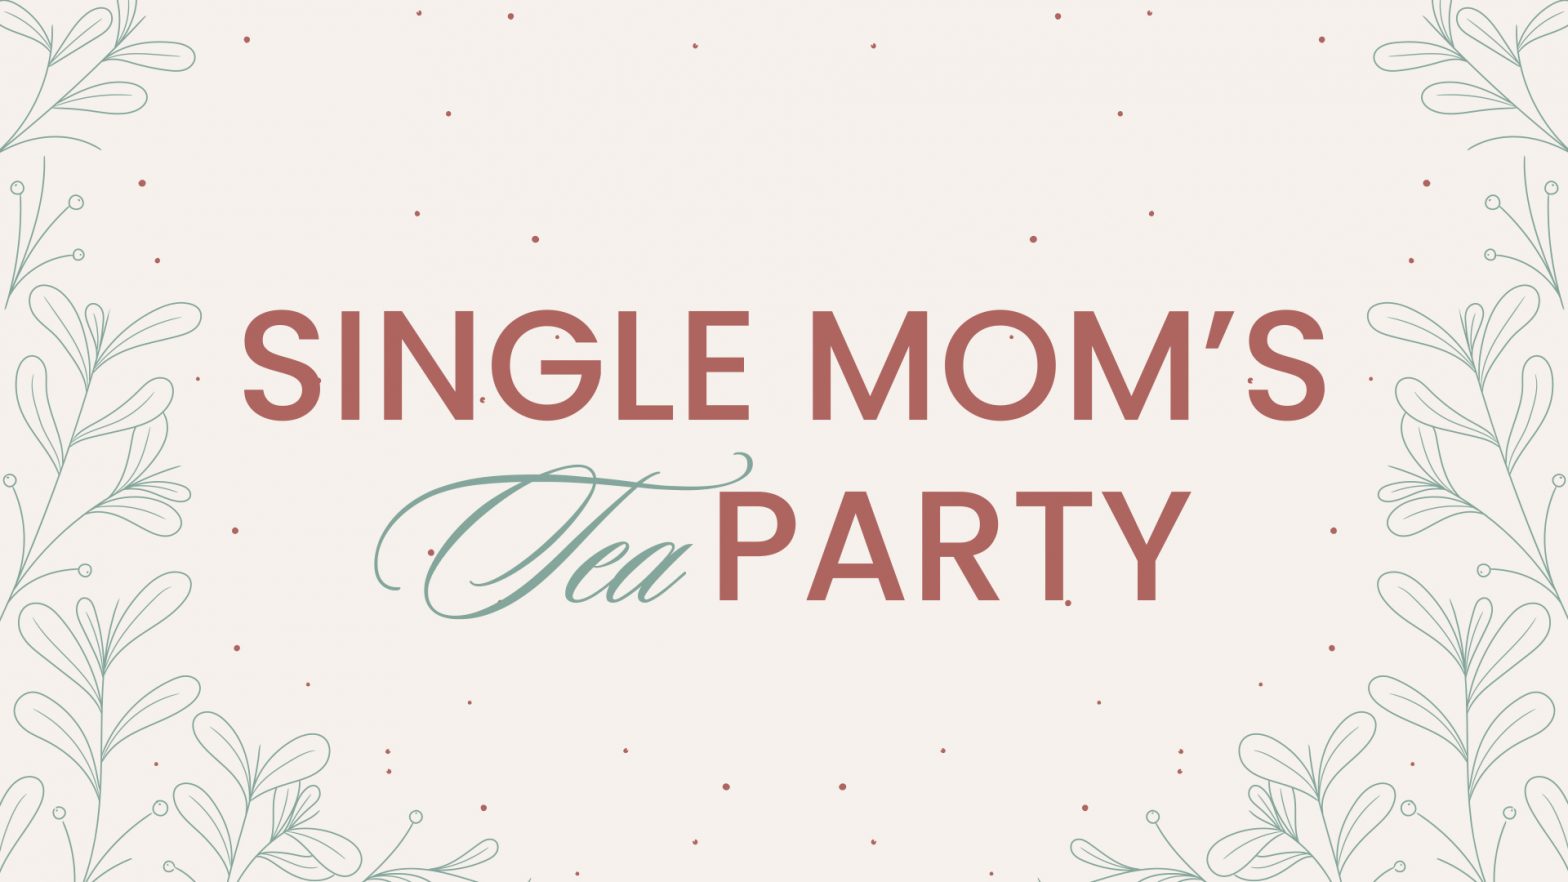 Single Mom’s Tea Party image